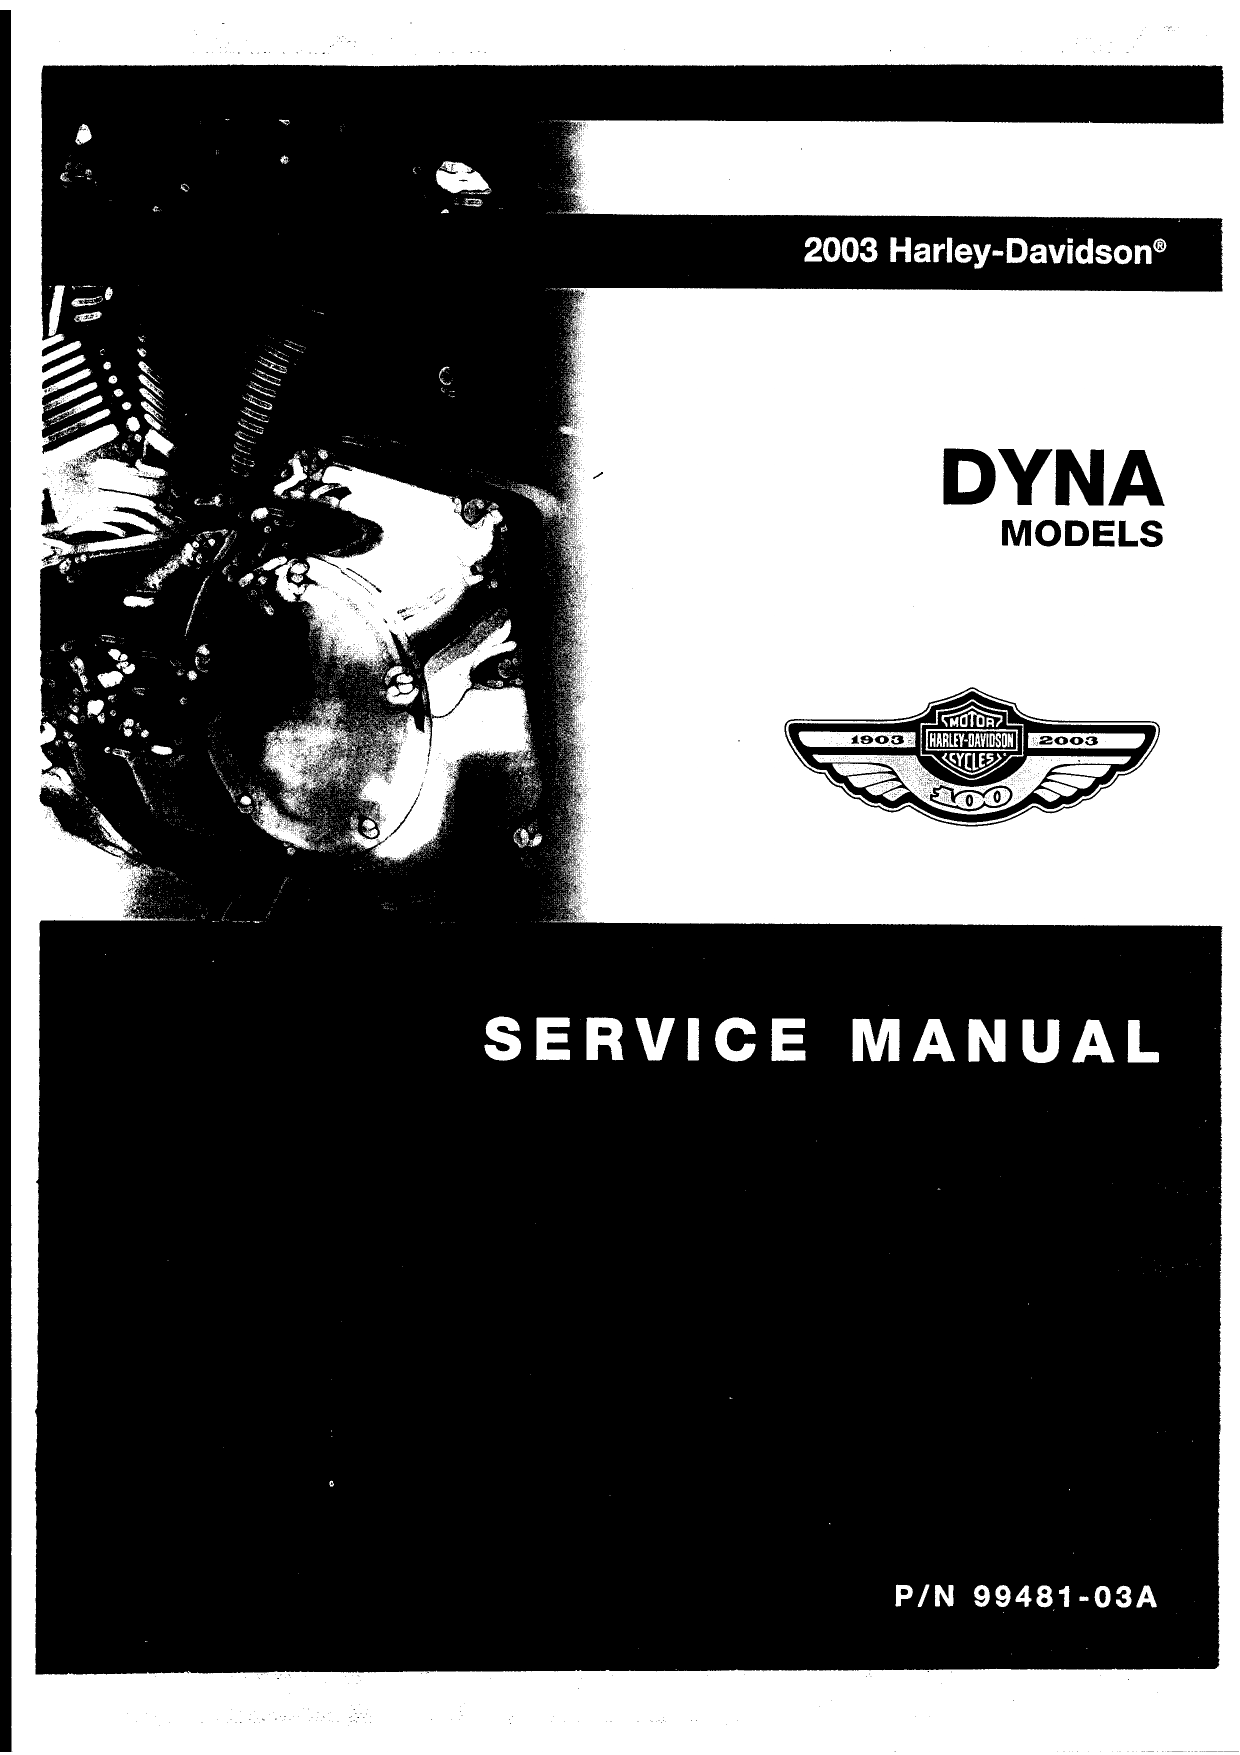 2003 Harley-Davidson Dyna Glide repair manual Preview image 1